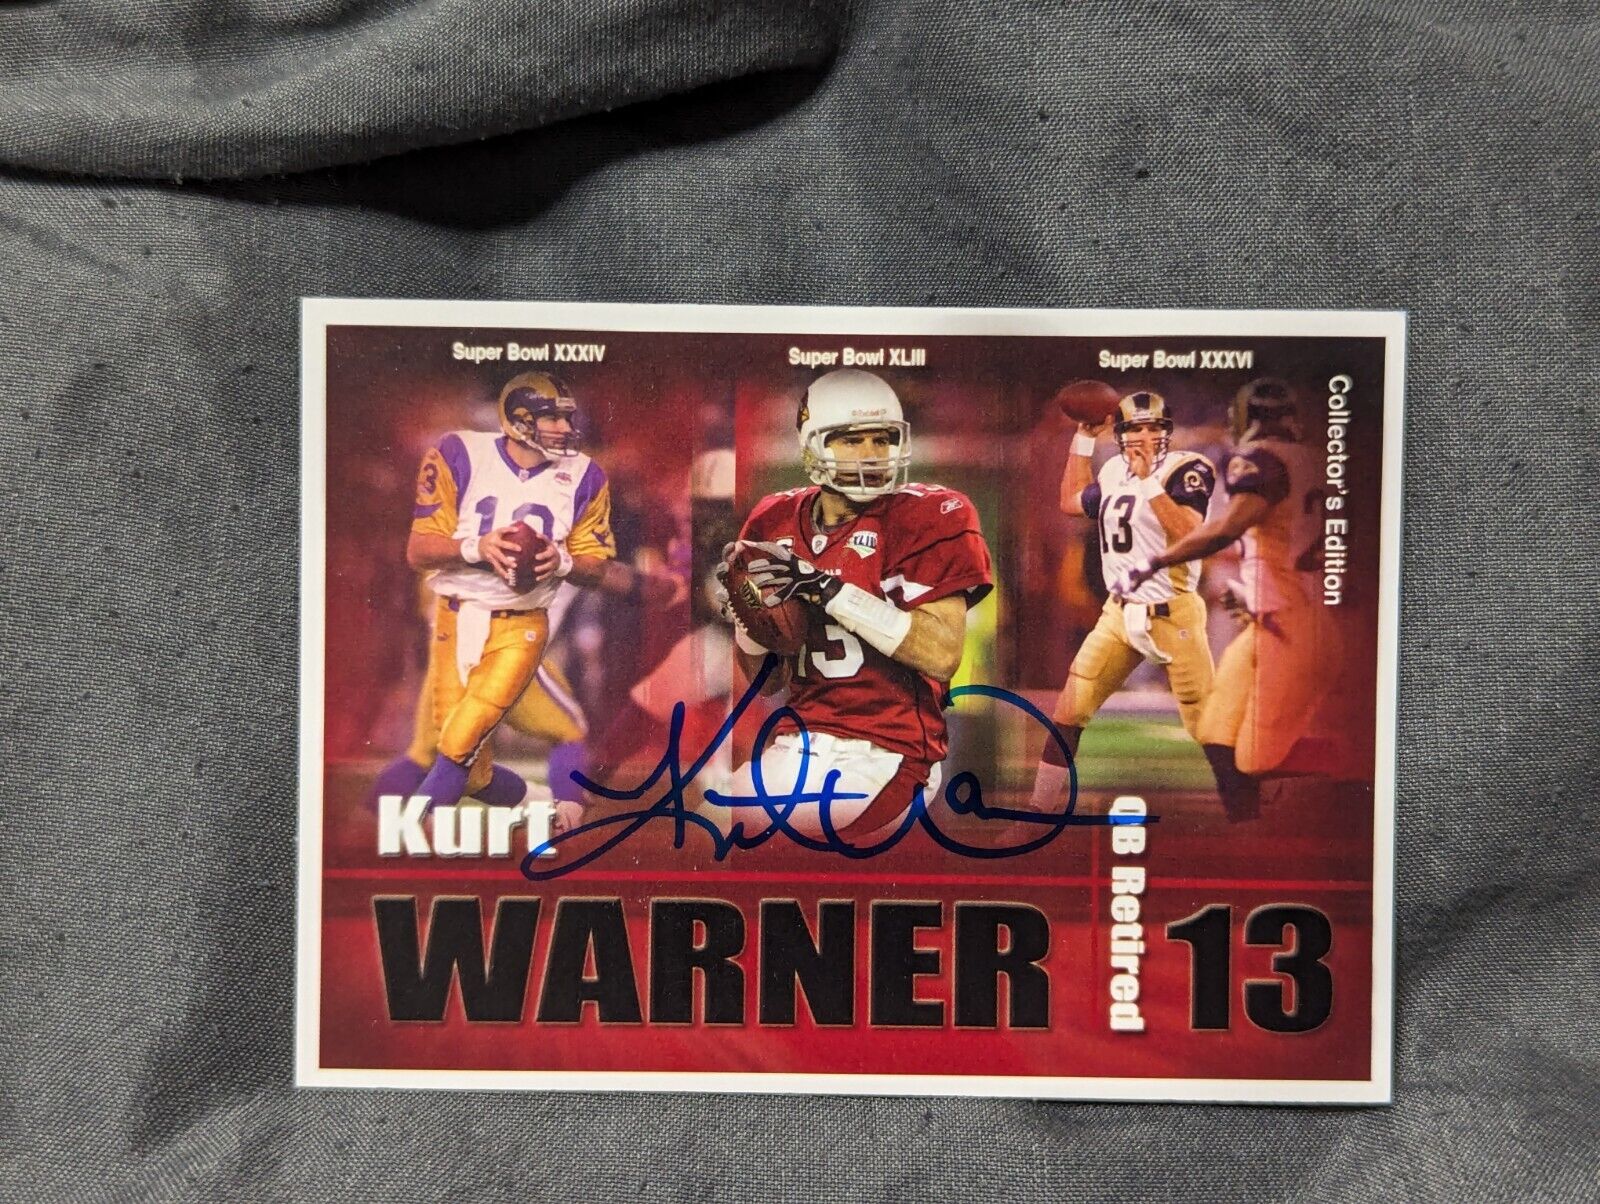 Kurt Warner Autograph Card Signed St Louis Rams Super Bowl Champion